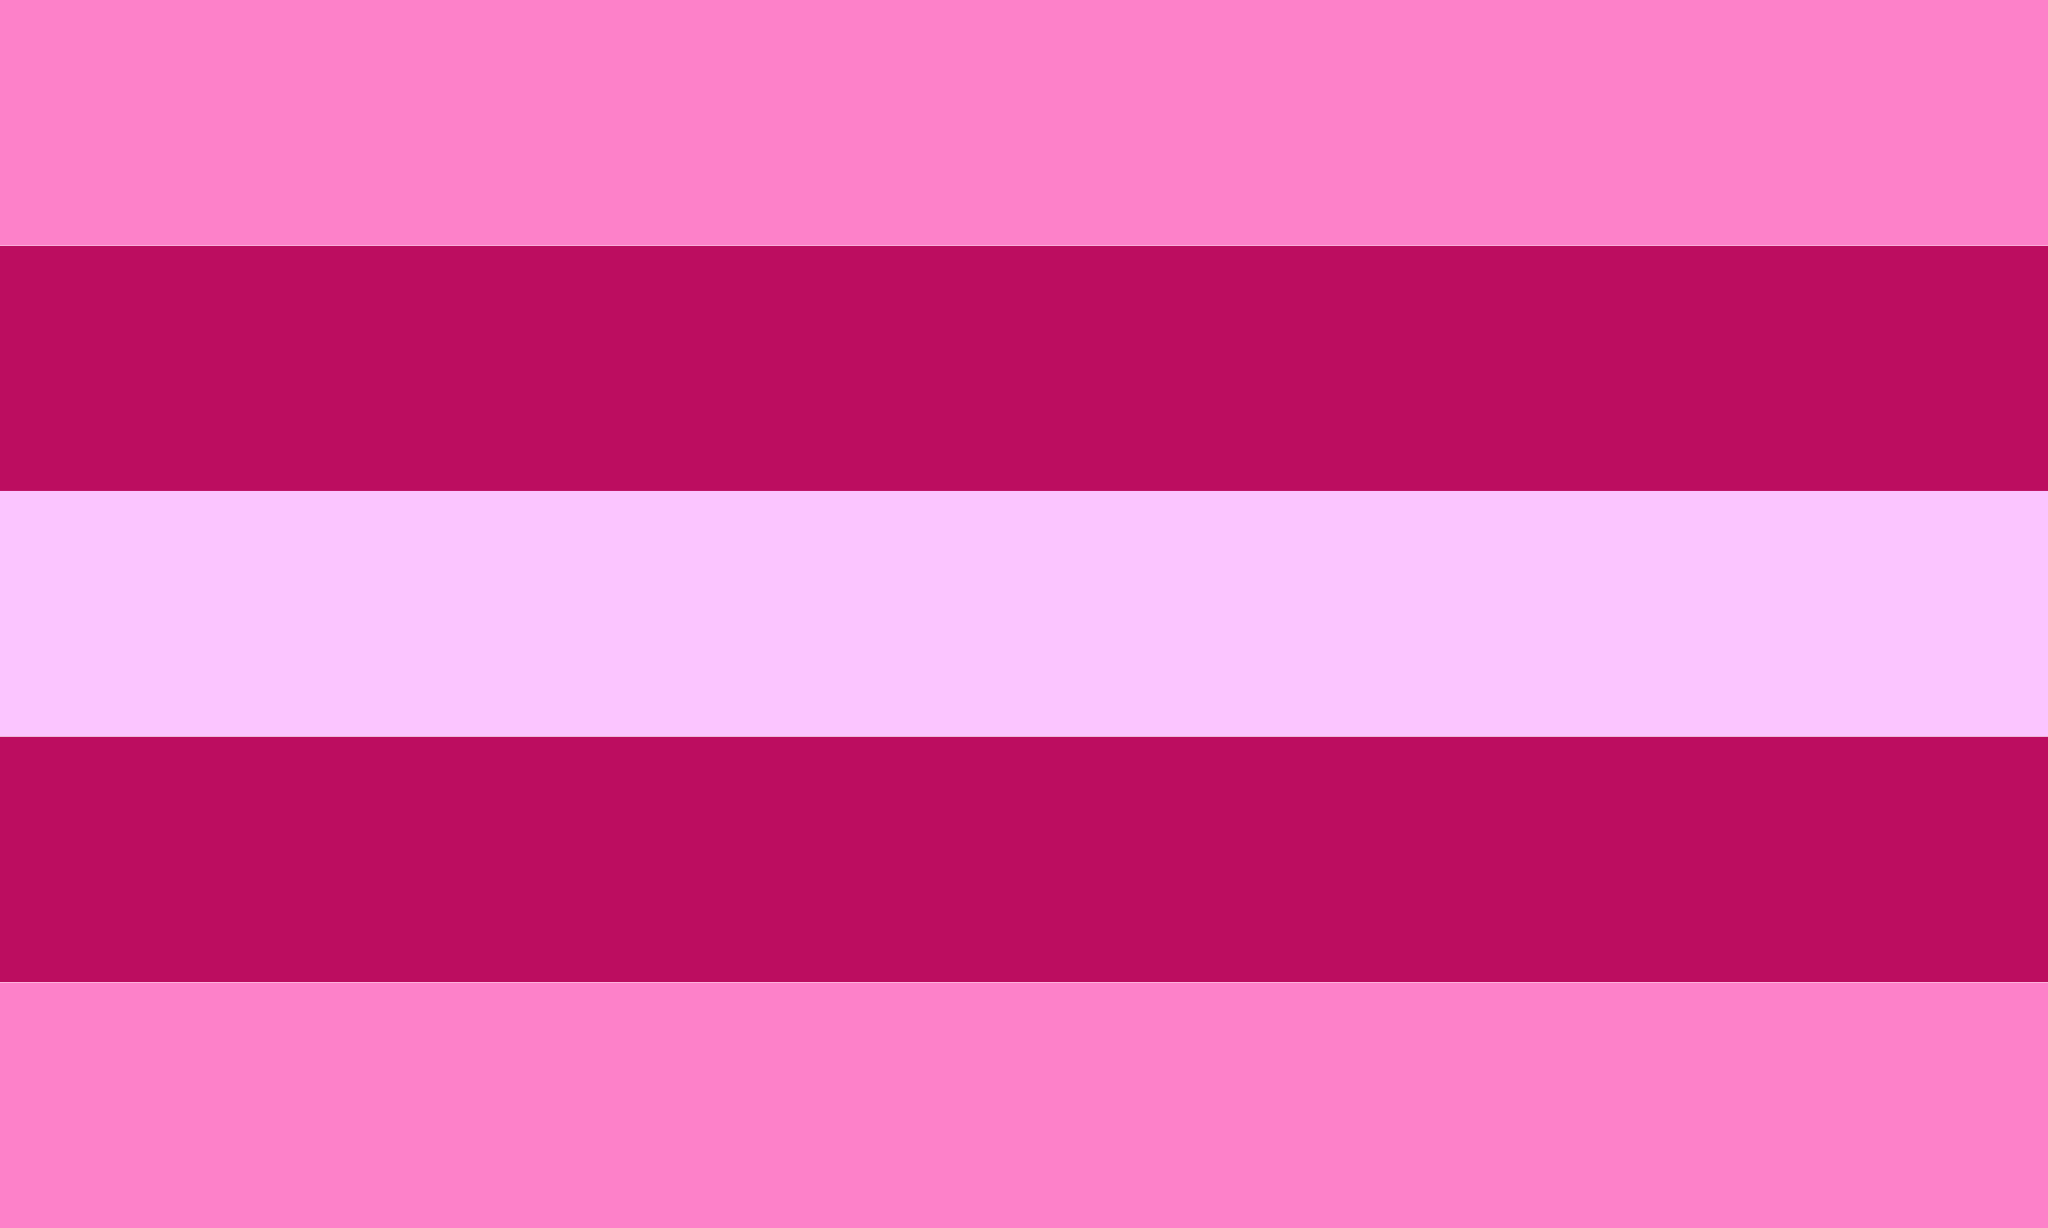 Bandeira Transfem composta por 5 faixas horizontais, sendo elas: 1 faixa central lilás, 2 faixas rosa escuro acima e abaixo da lilás e 2 faixas rosa claro e abaixo das rosas.